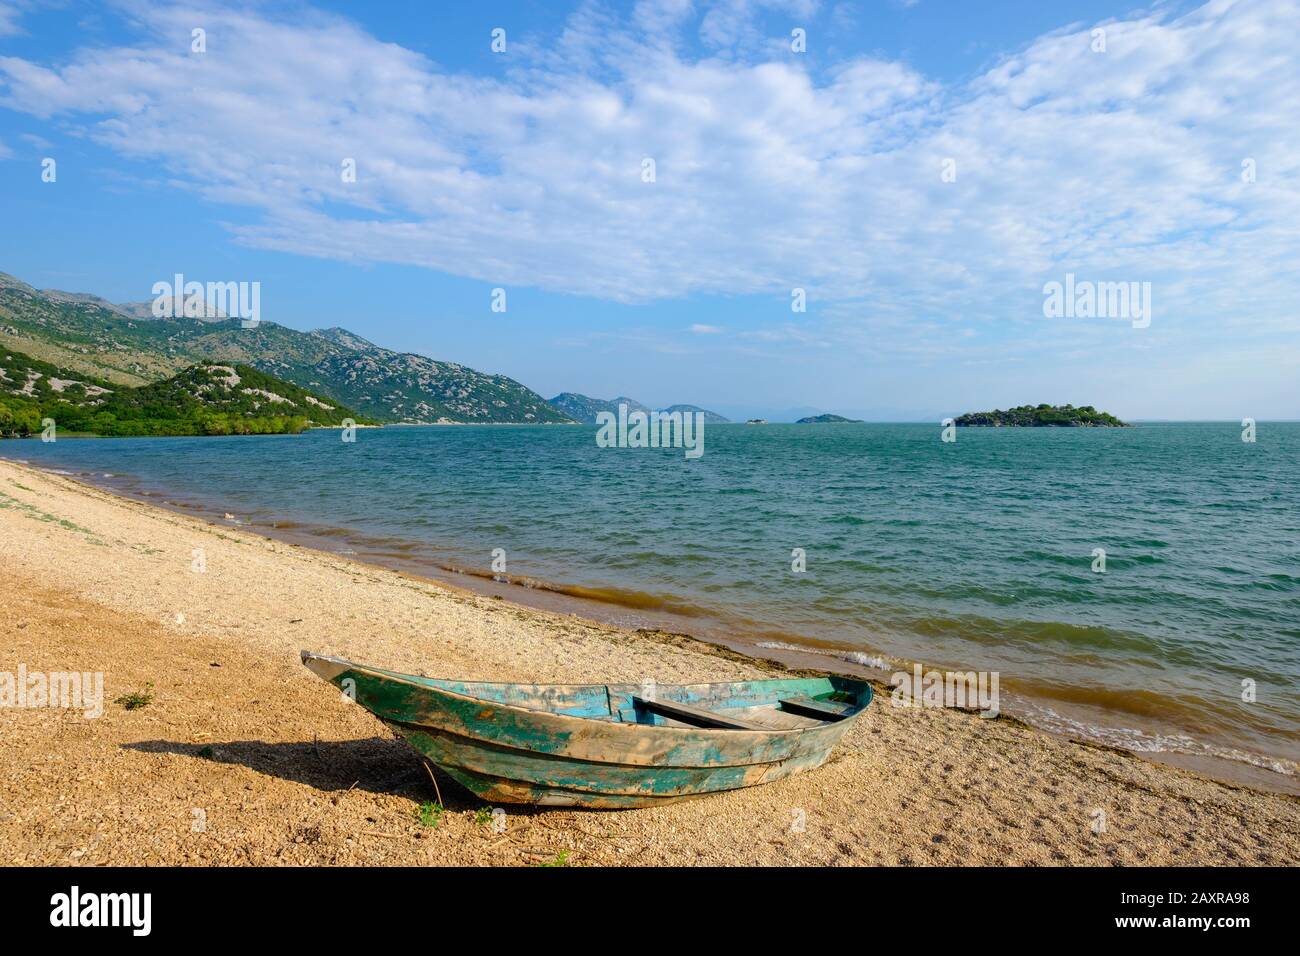 Barca sulla spiaggia di Murici, Lago Skadar, Skadarsko Jezero, Parco Nazionale del Lago Skadar, al Bar, Montenegro Foto Stock